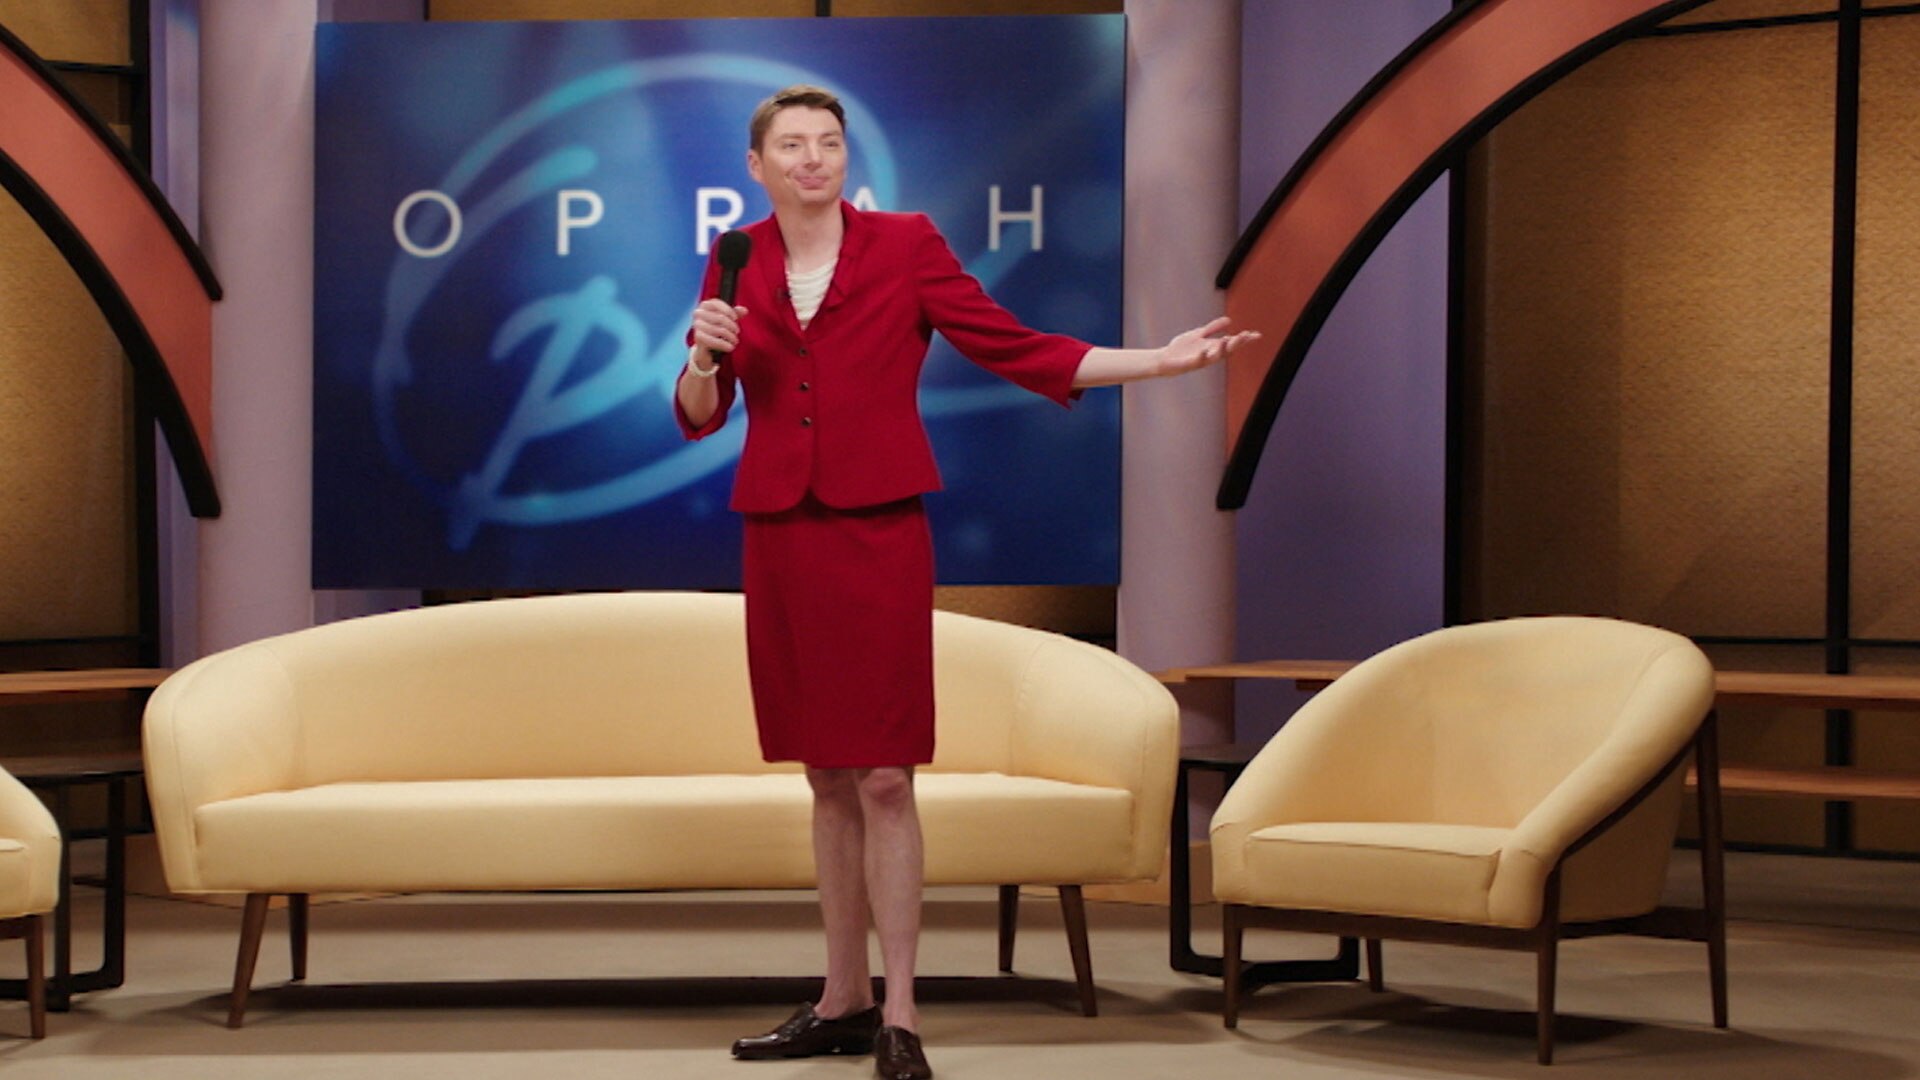 Watch Saturday Night Live Highlight: Oprah - NBC.com1920 x 1080